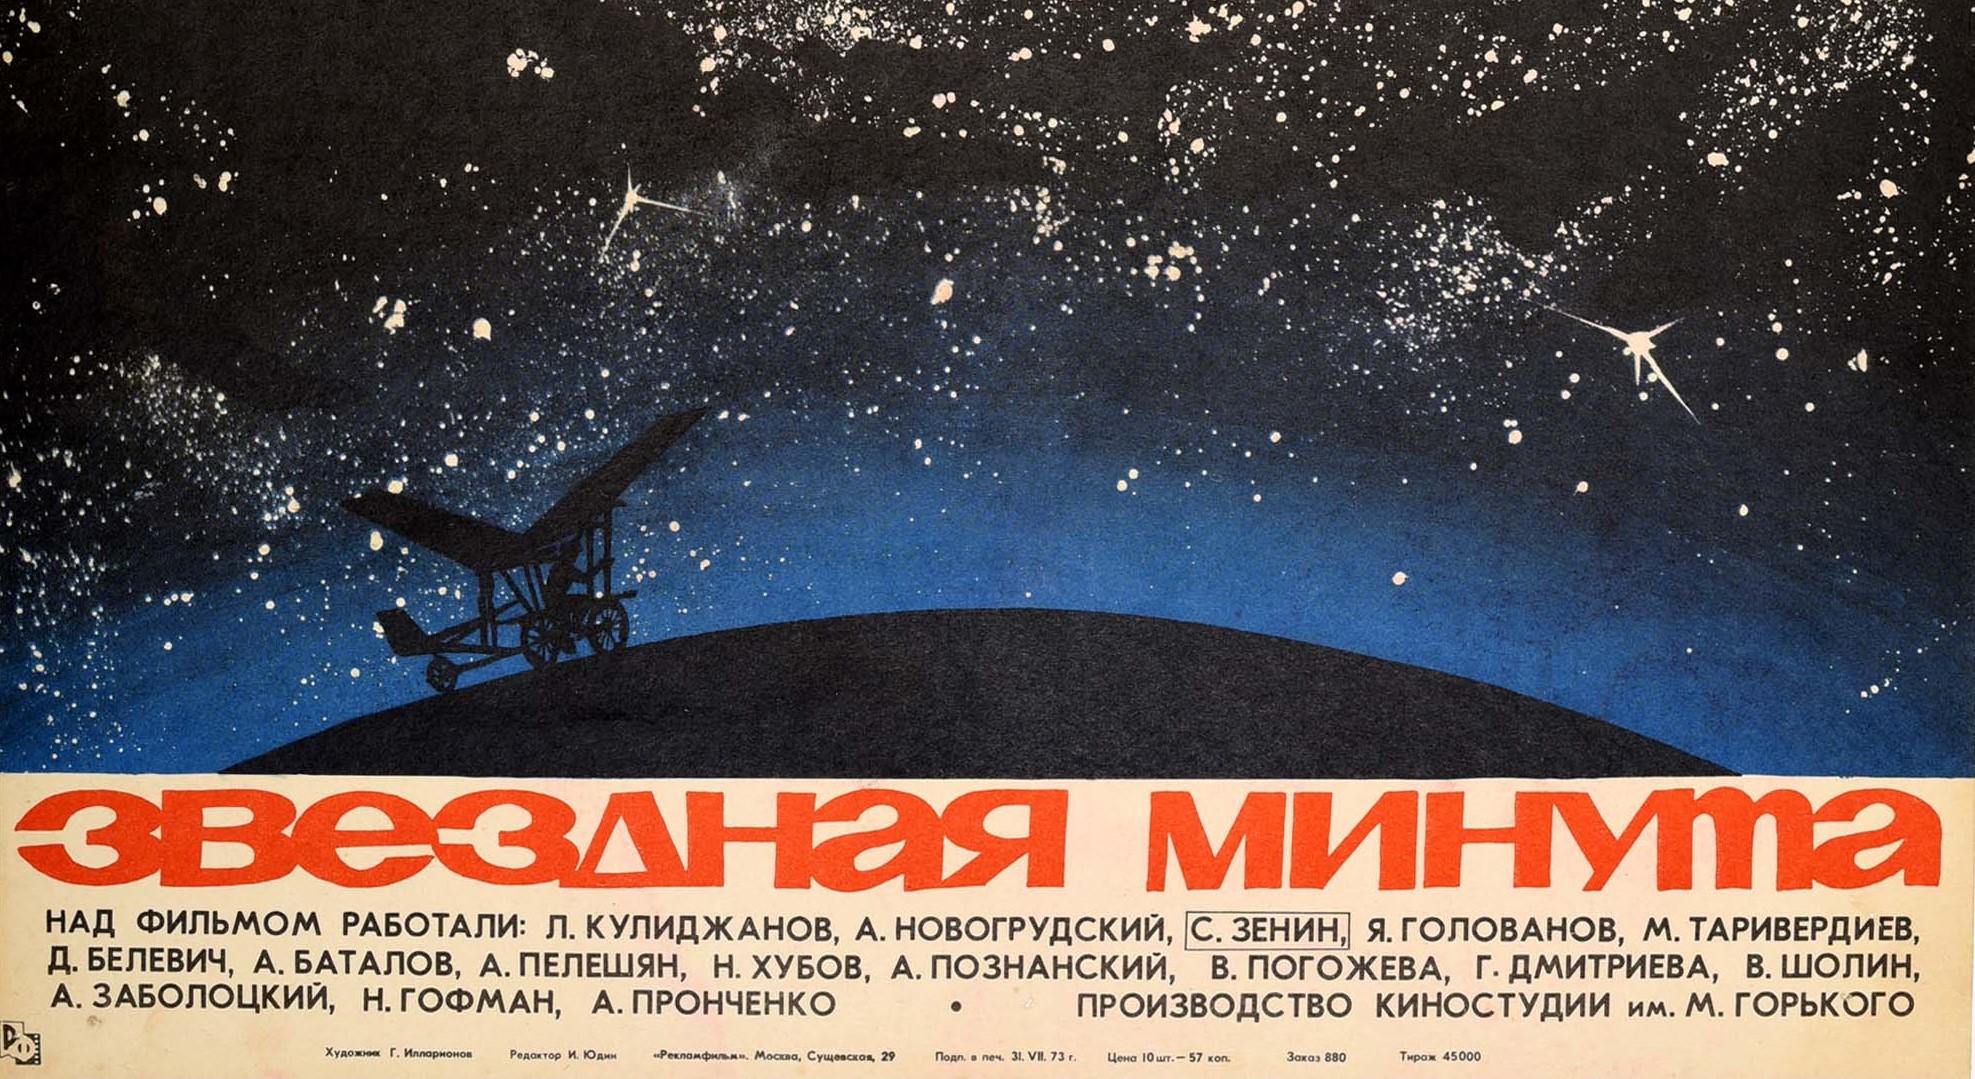 Russian Original Vintage Space Flight Movie Poster Ft Cosmonaut Yuri Gagarin Star Minute